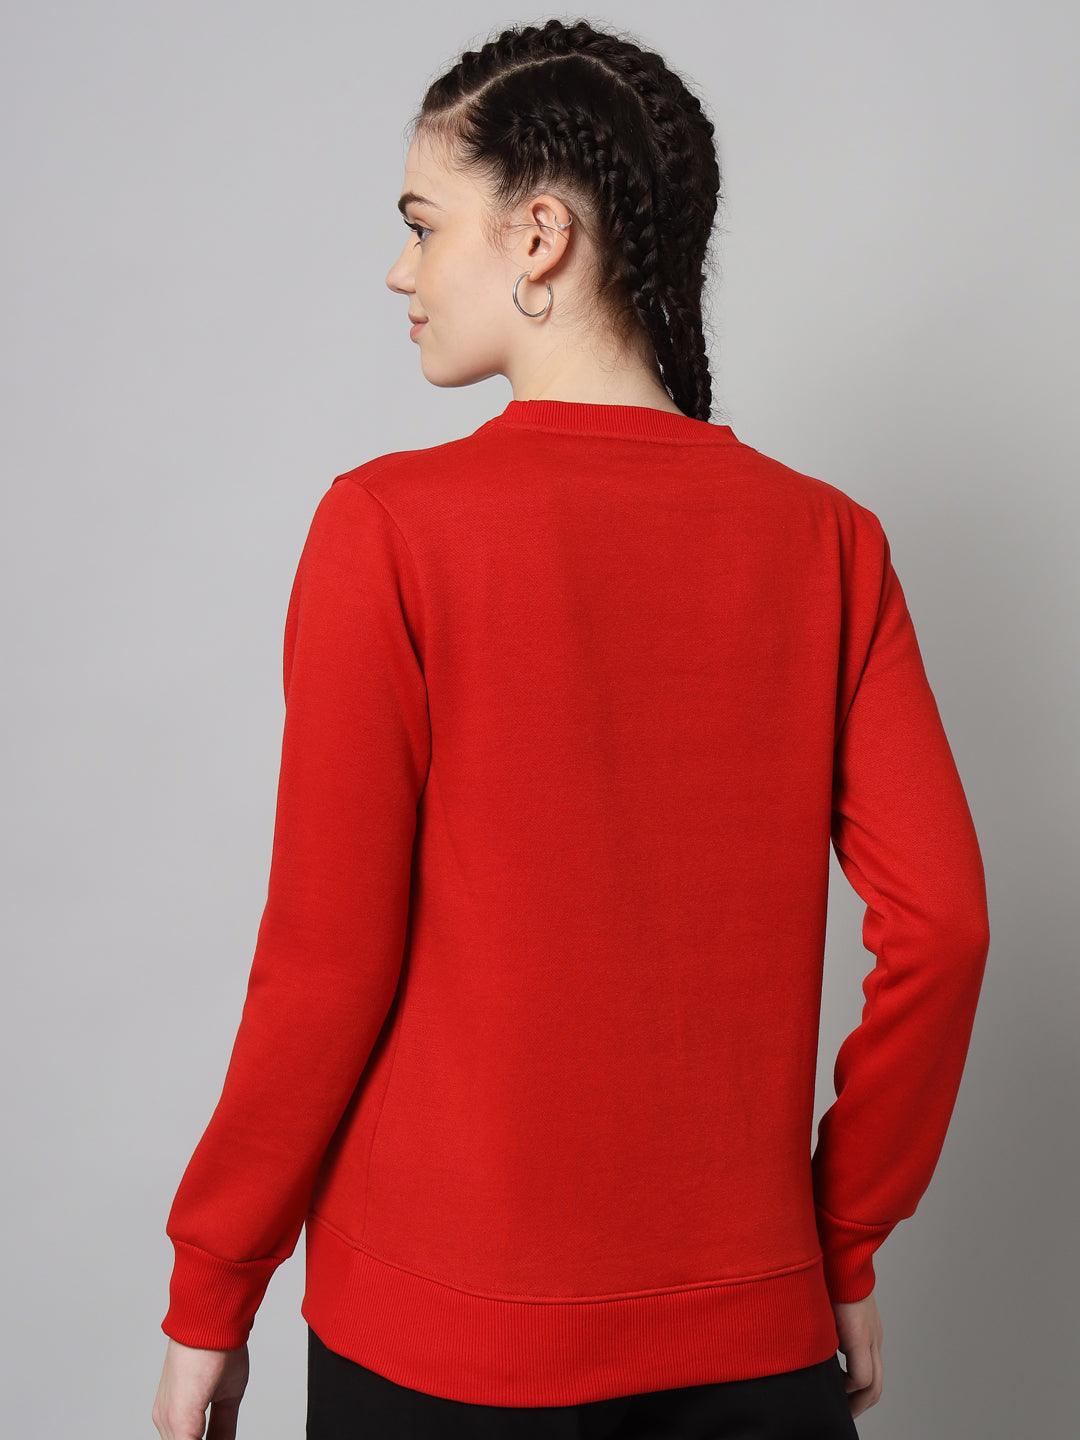 Griffel Women’s Teddy Print Round Neck White Red Cotton Fleece Full Sleeve Sweatshirt - griffel